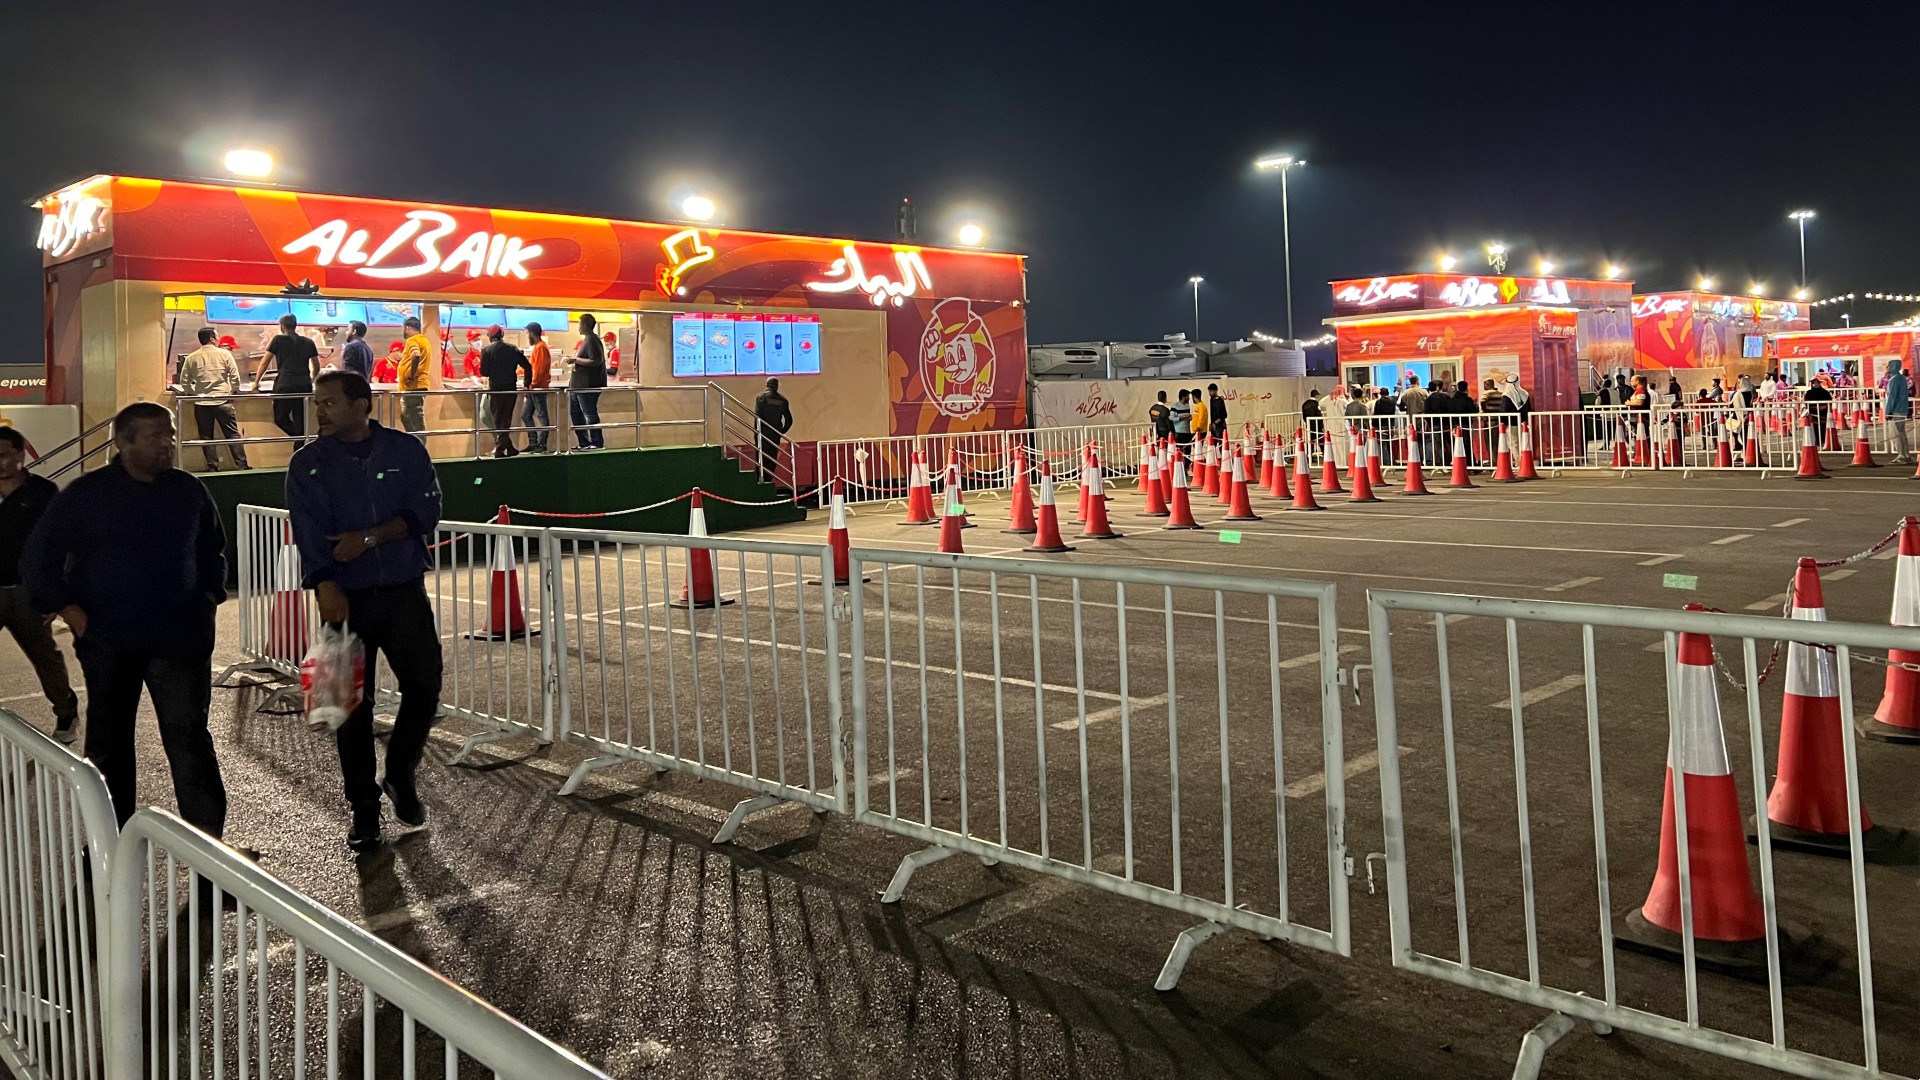 The hugely popular Saudi fast-food chain Al Baik deployed food trucks behind Al Messila metro station in the capital Doha (MEE/Firoz Hassan)